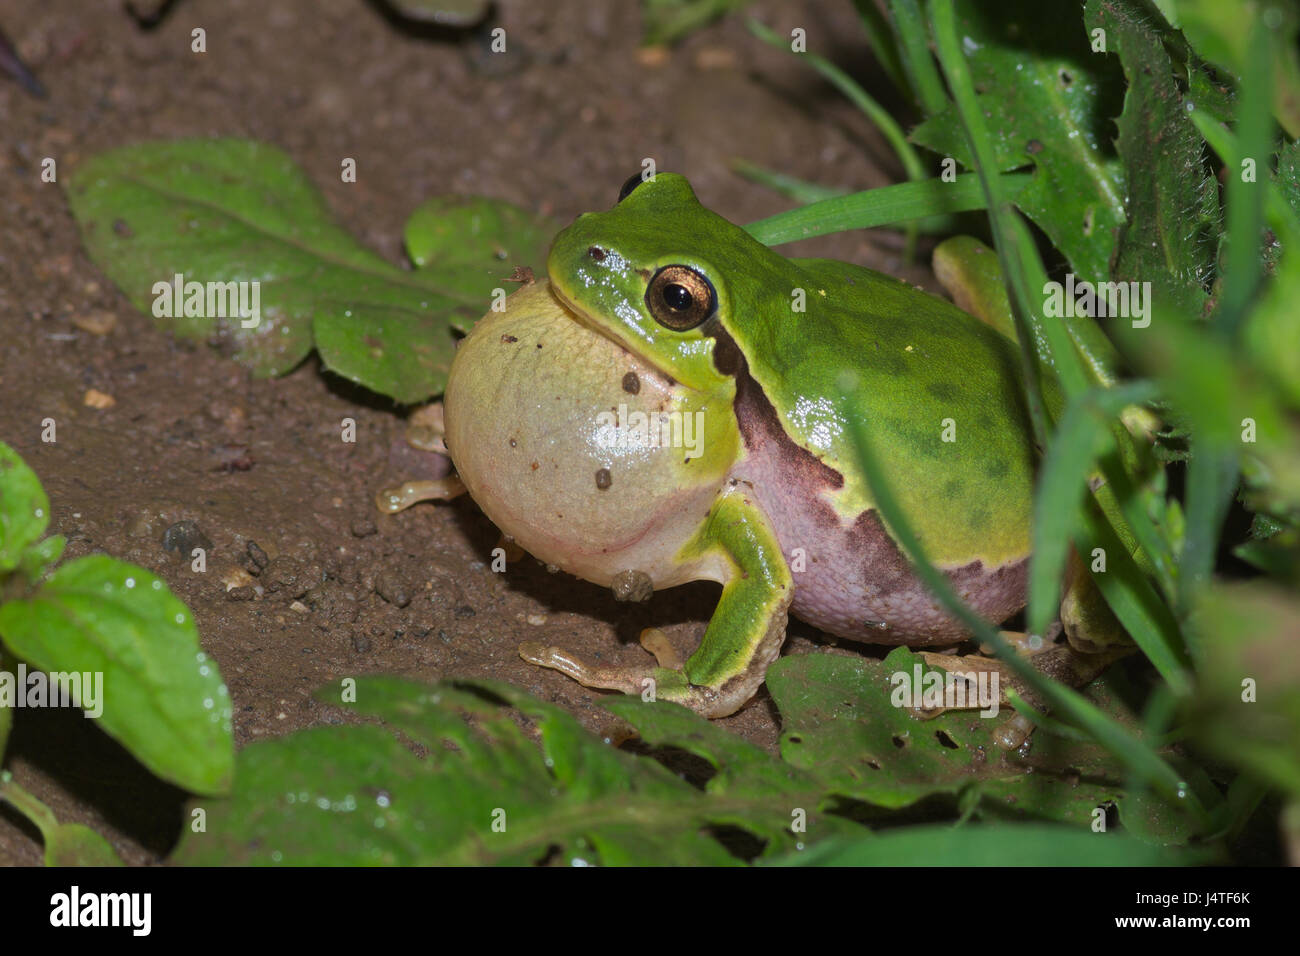 Male of Italian tree frog (Hyla intermedia) calling with vocal sac during the breedin season near a water pond Stock Photo